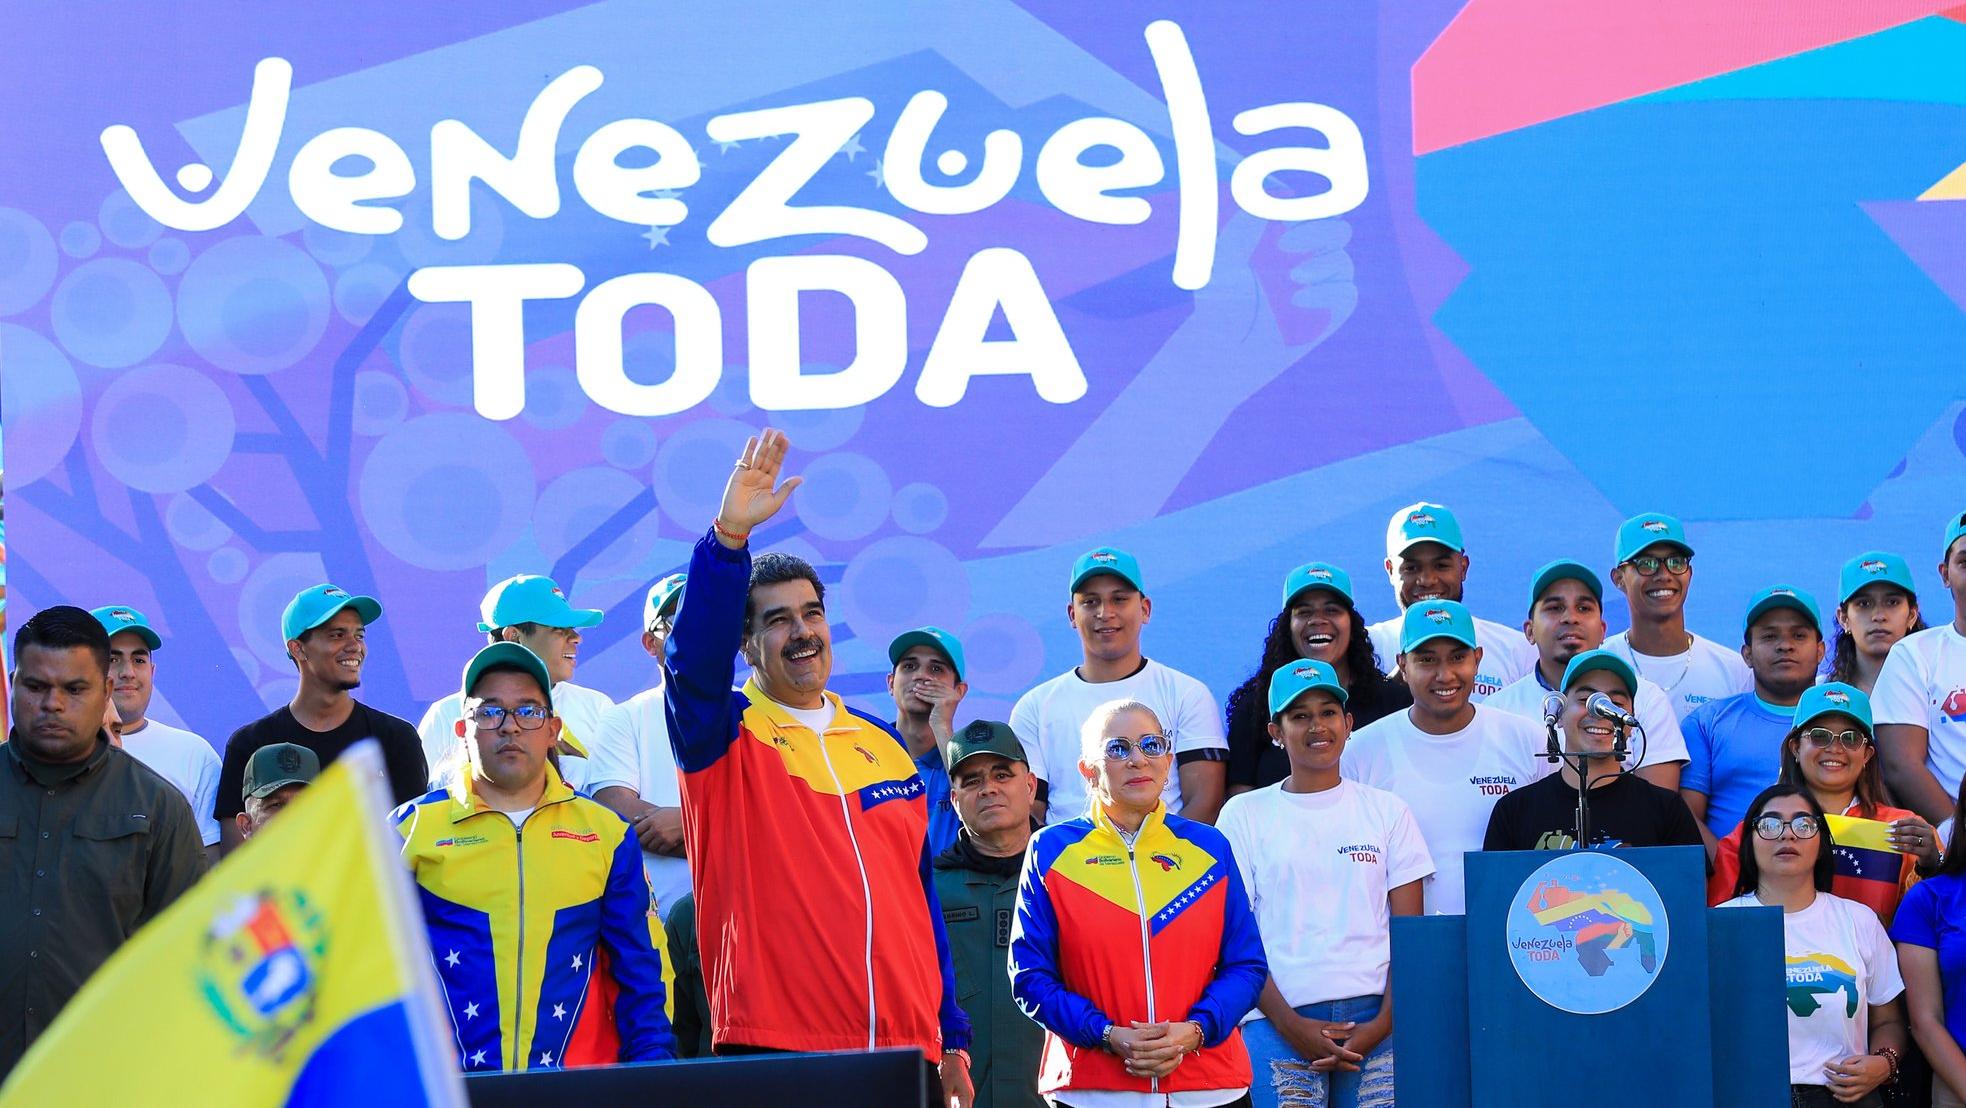 Freddy Núñez minister of Communication: The campaign, instead of dividing Venezuelans, has united them.